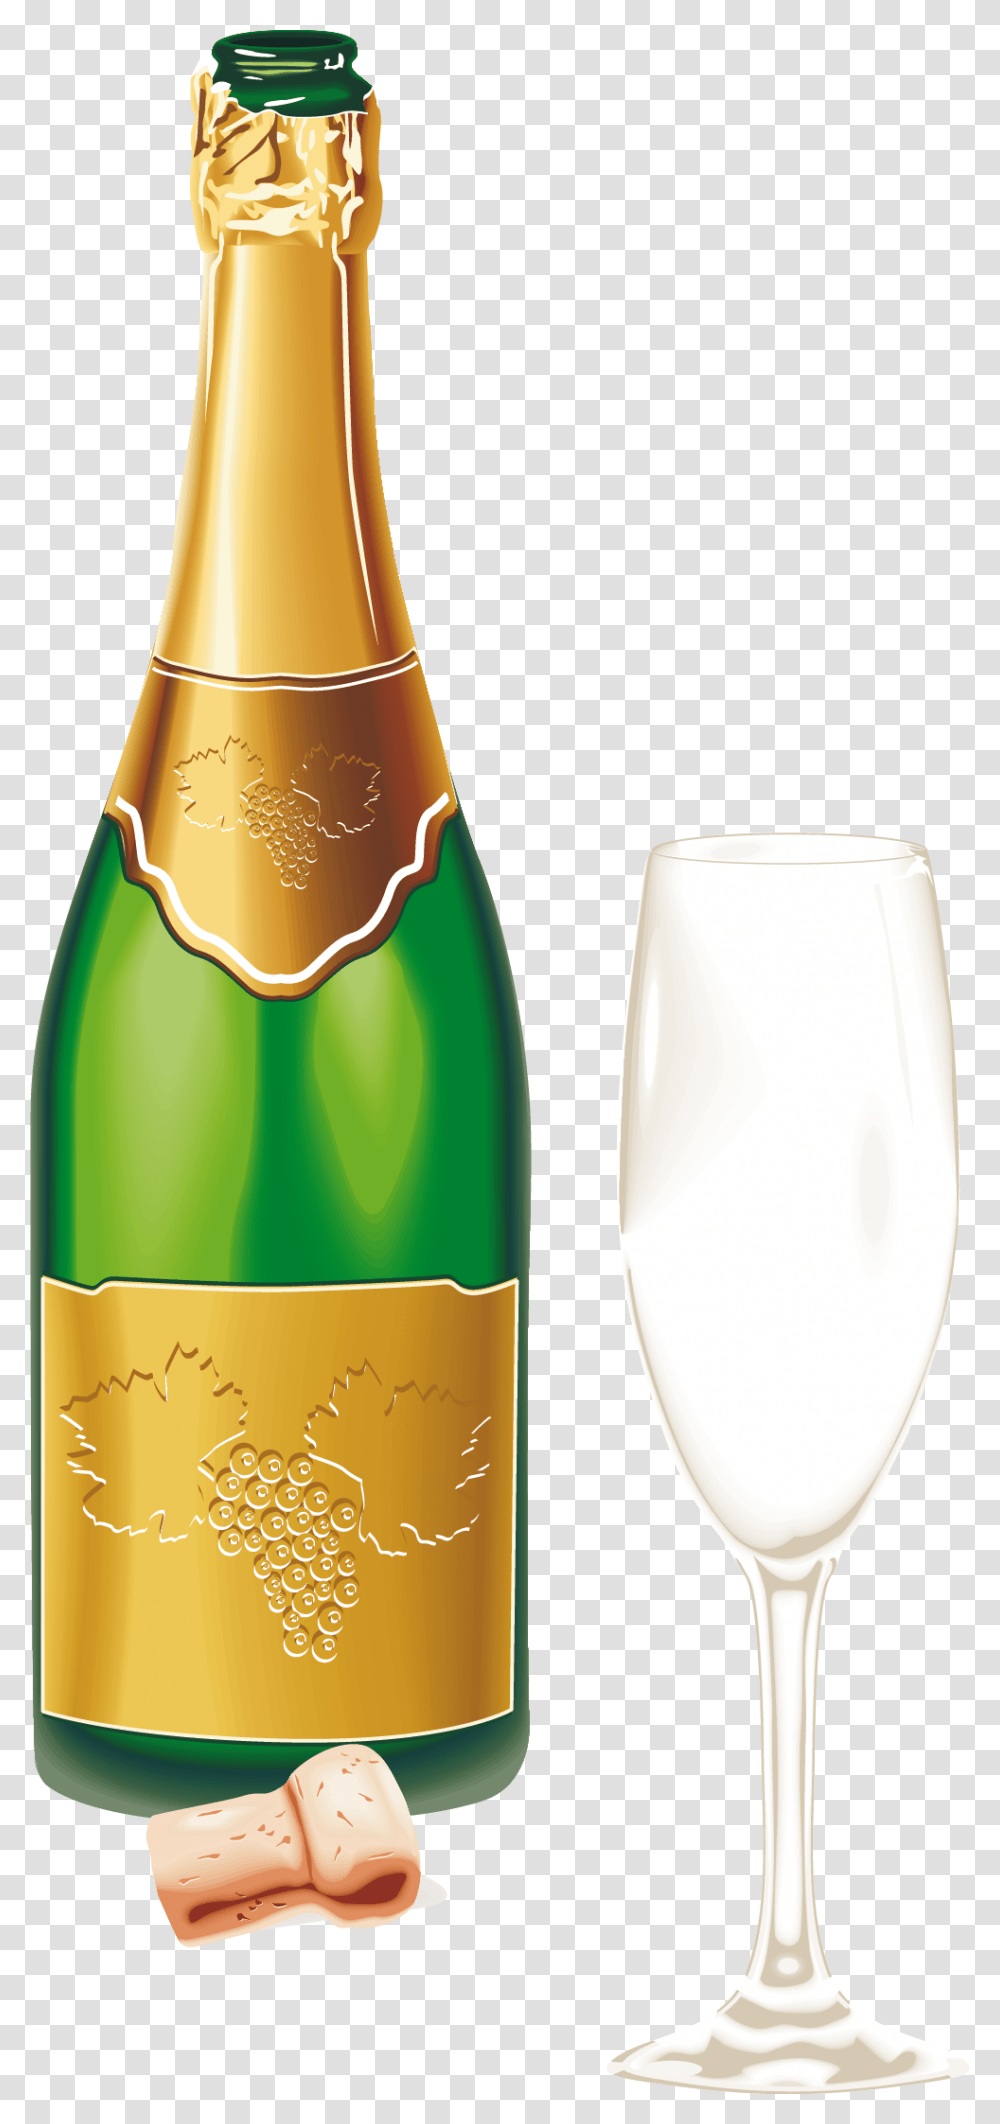 Champagne Images Champagne Bottle Glass, Beverage, Alcohol, Wine, Label Transparent Png